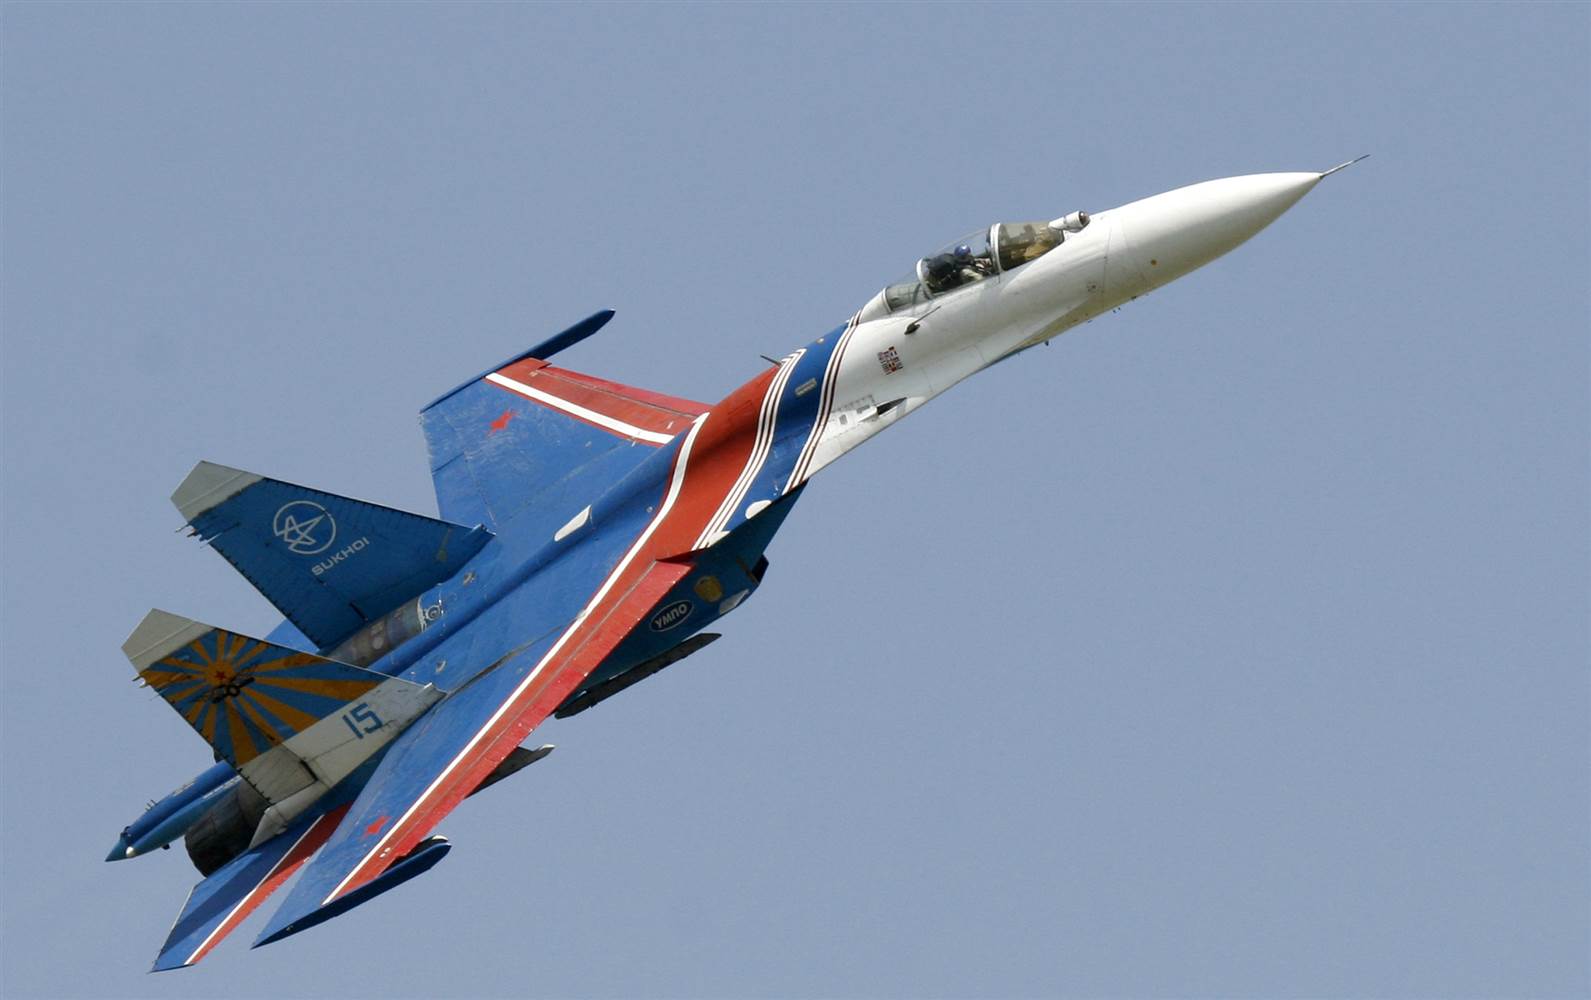 Russian Warplane Flies in 'Unsafe' Manner Near U.S. Aircraft